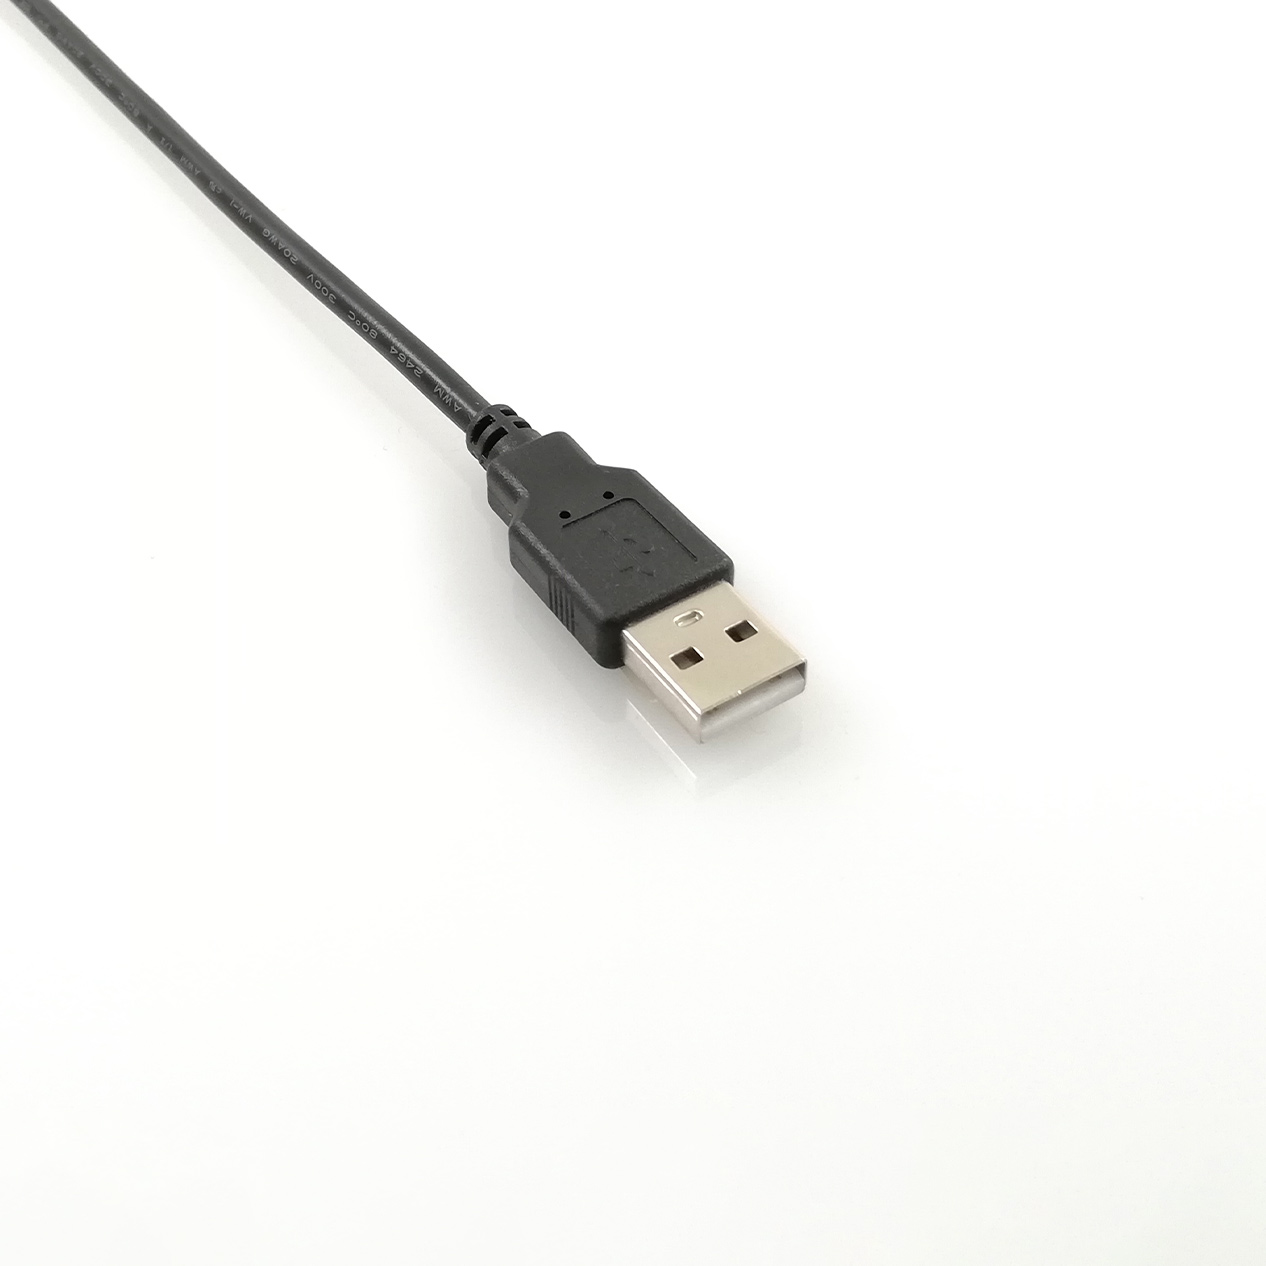 USB電源ケーブル